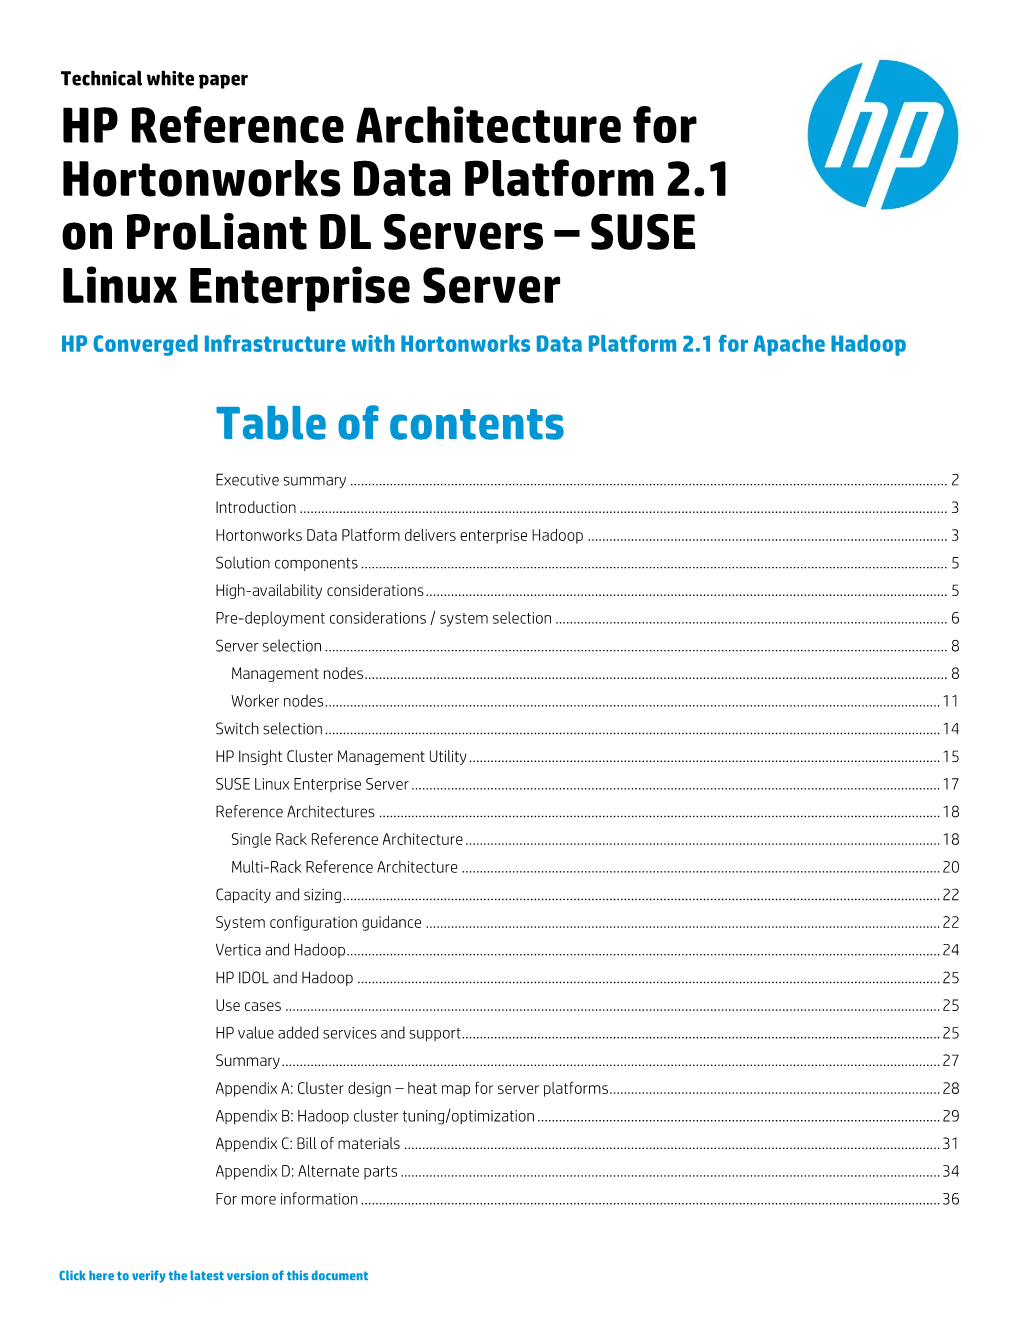 HP Reference Architecture for Hortonworks Data Platform 2.1 On